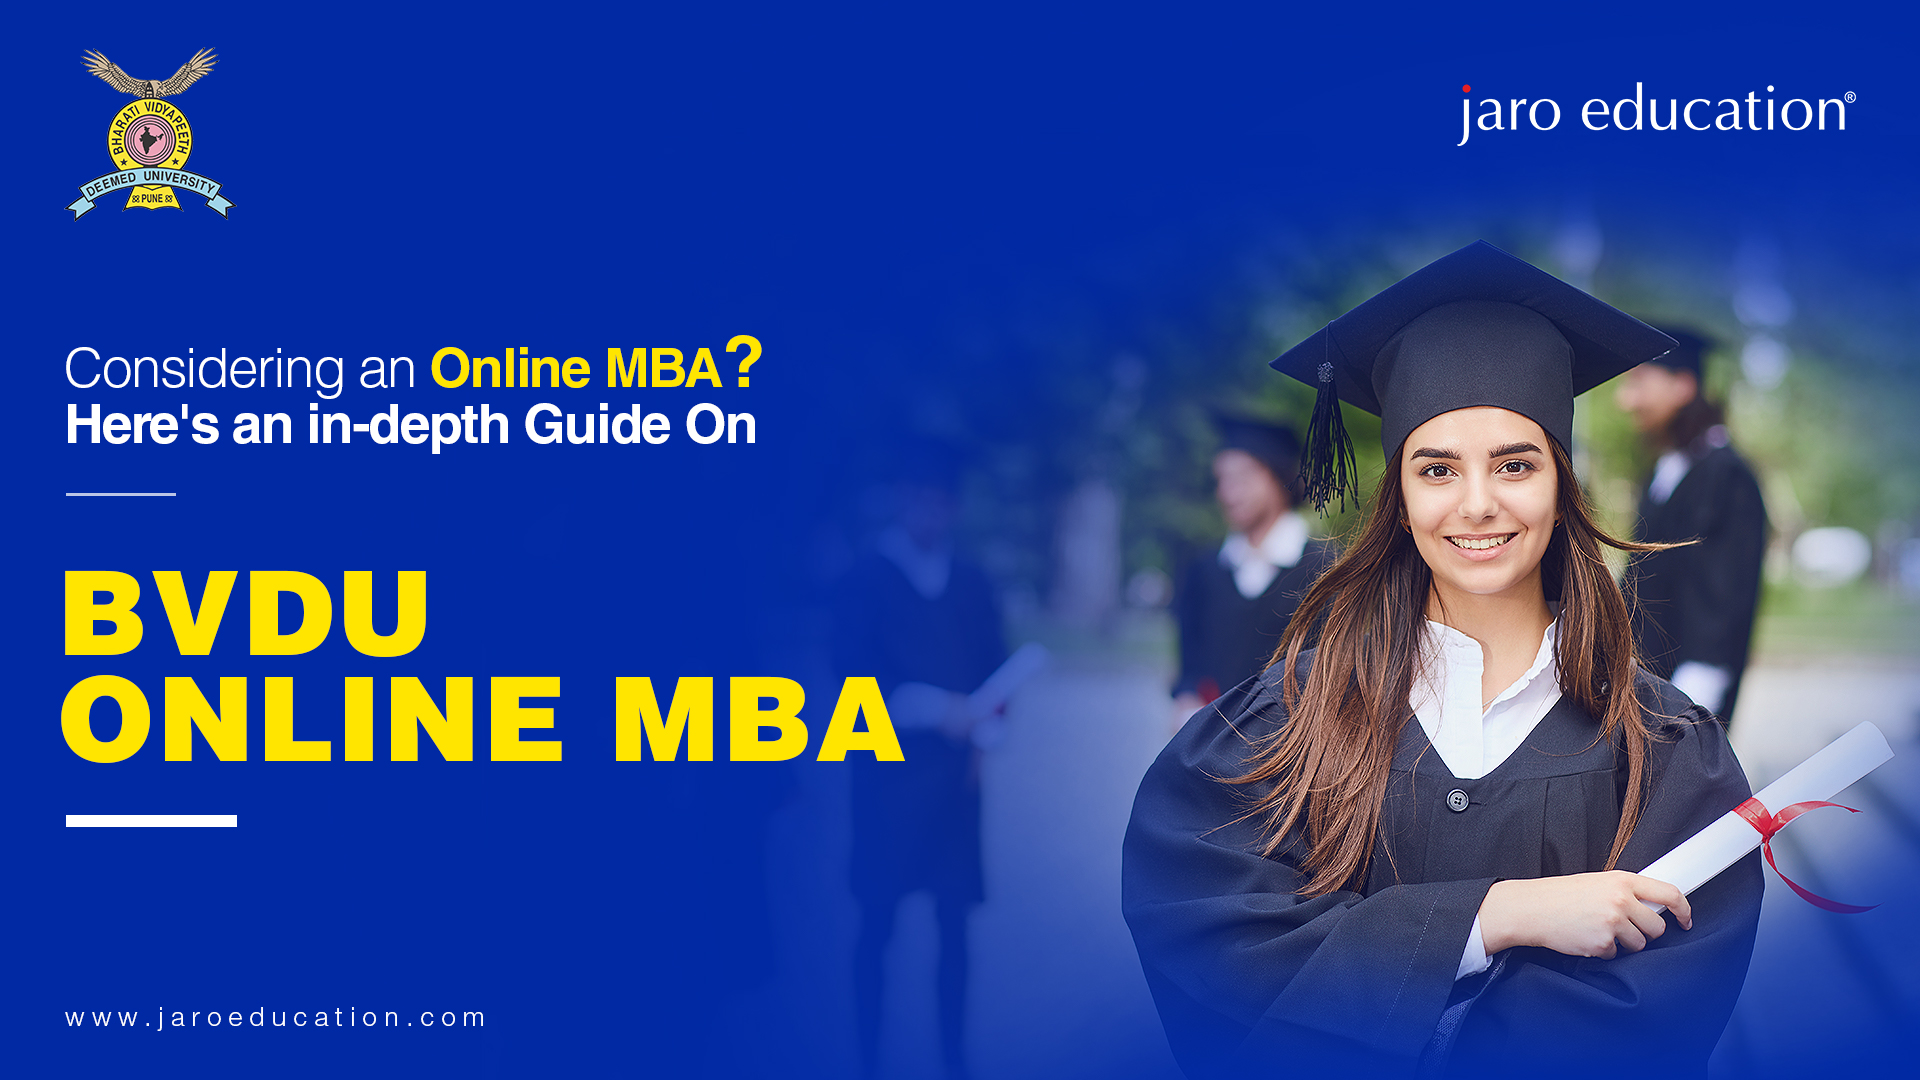 BVDU-Online-MBA-Jaro